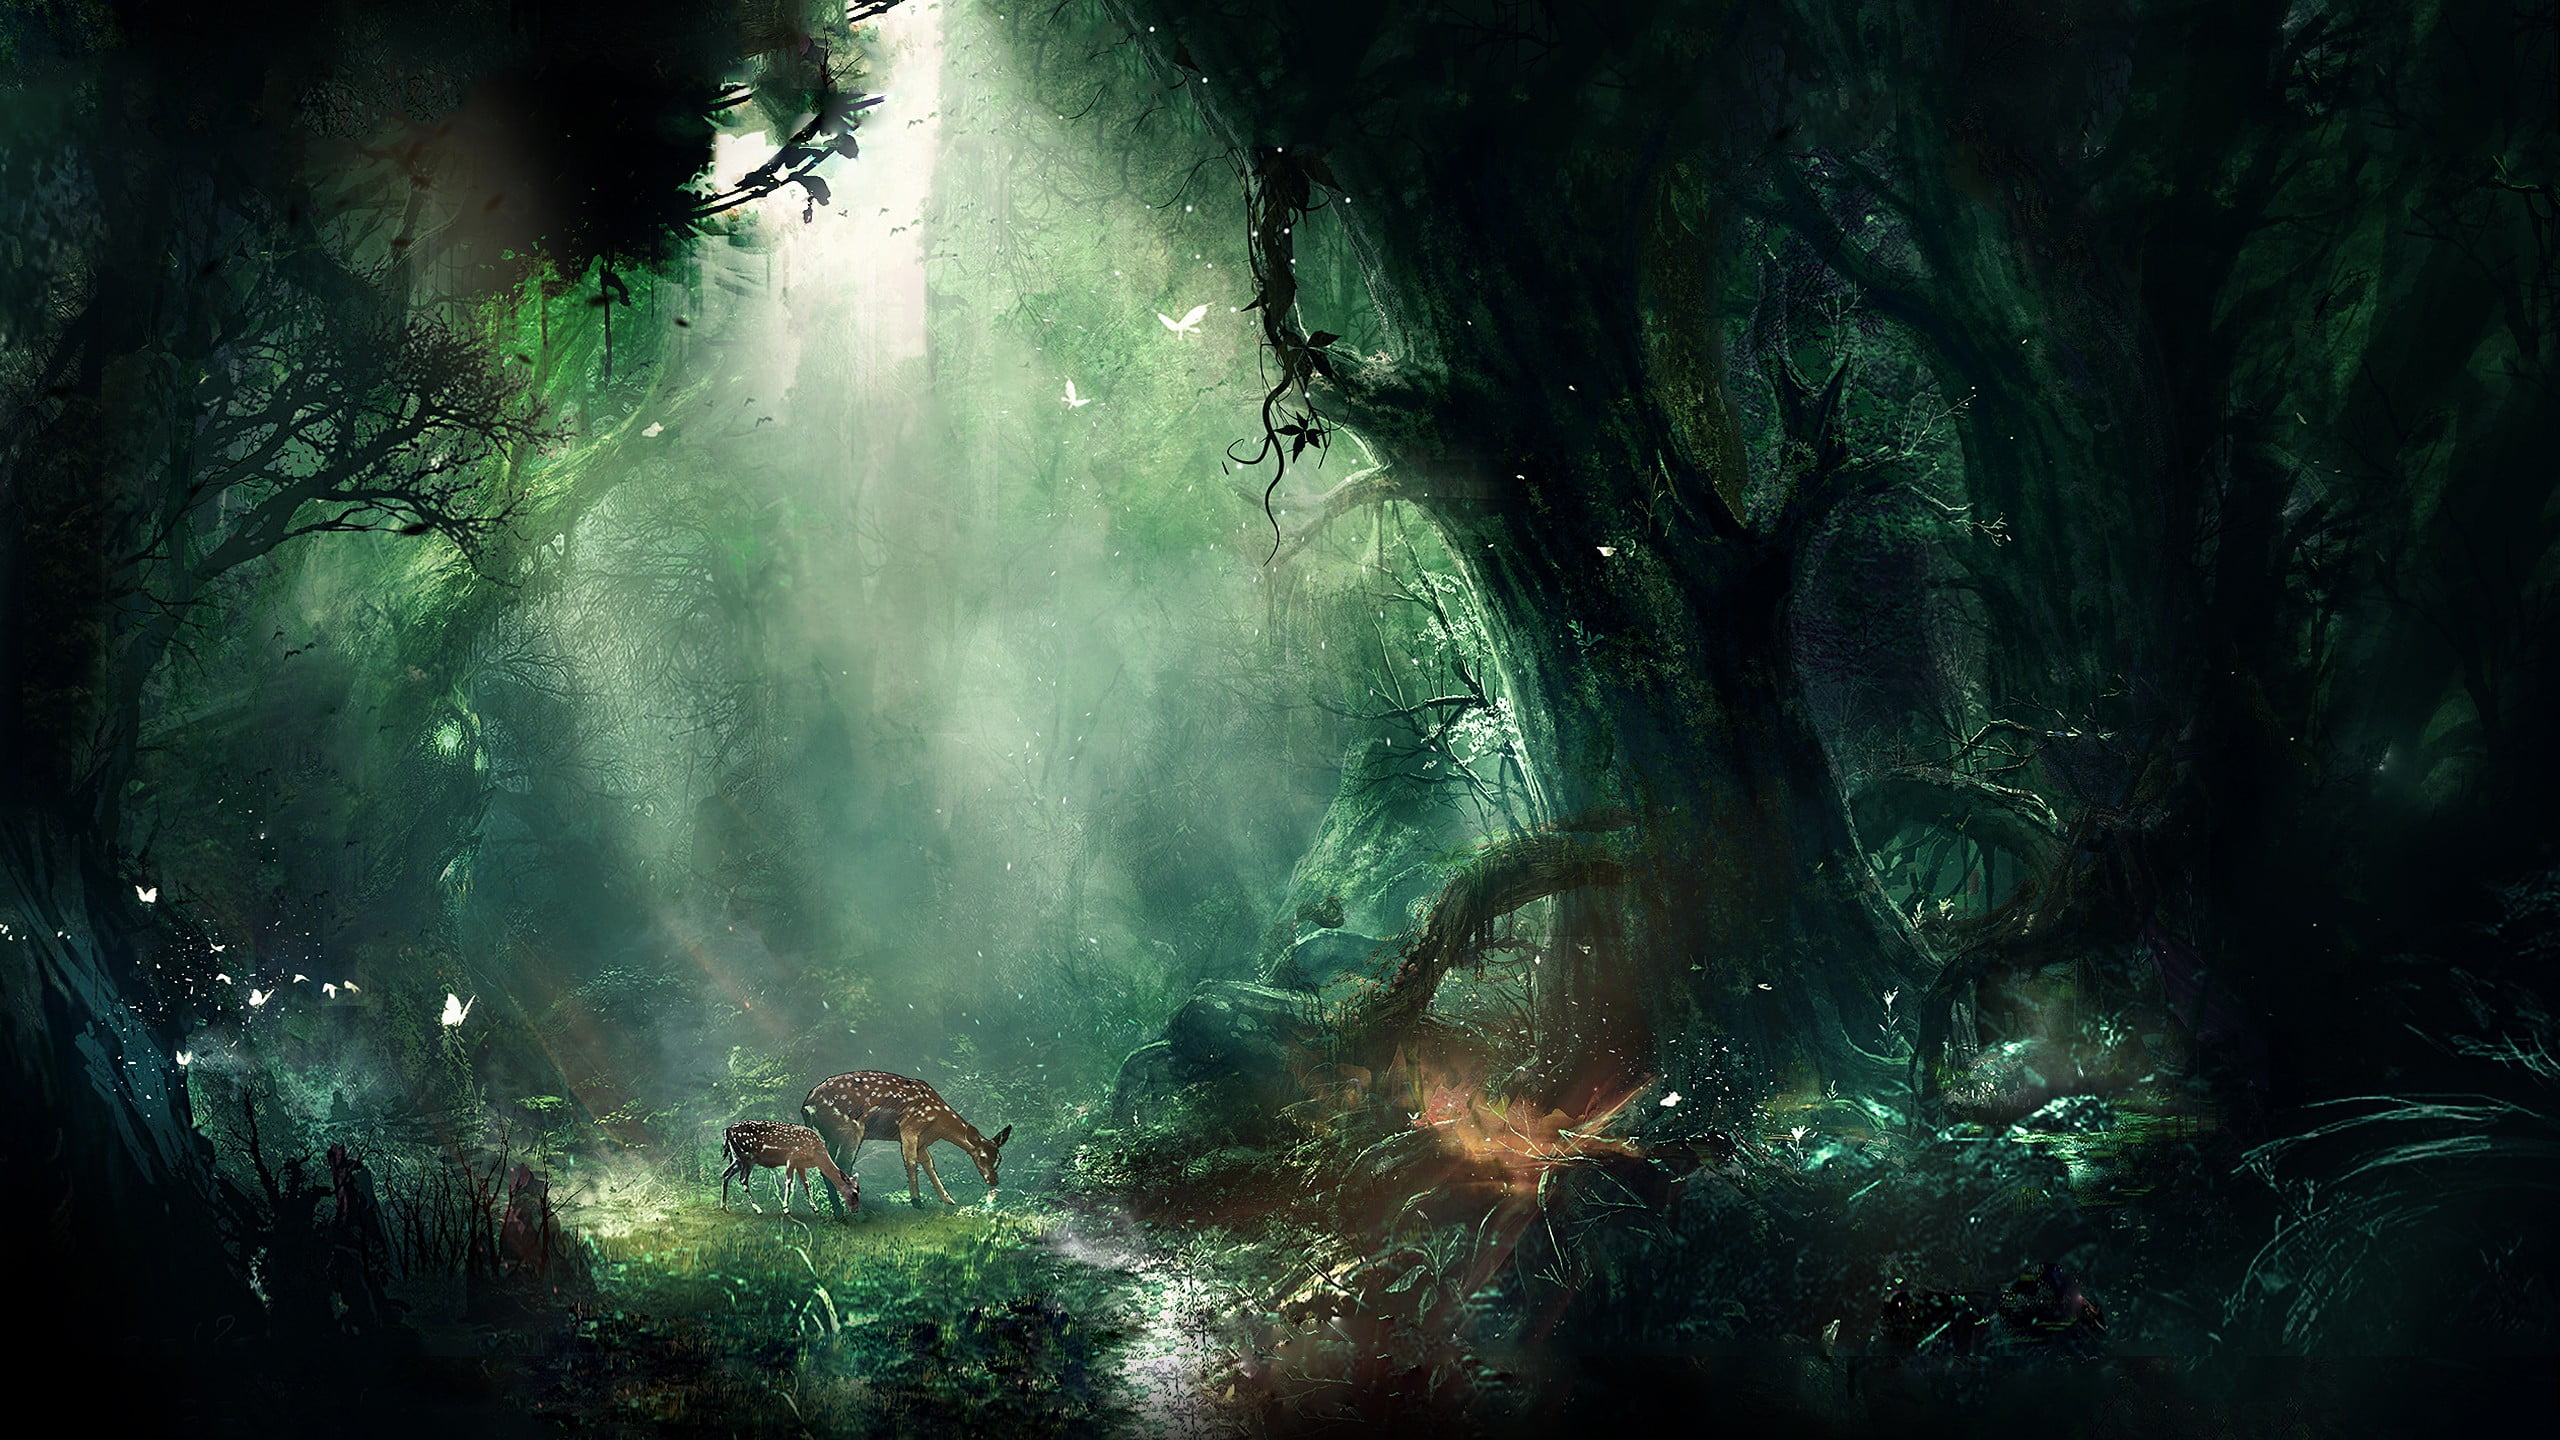 brown deer, doe in the middle of forest painting, artwork, digital art